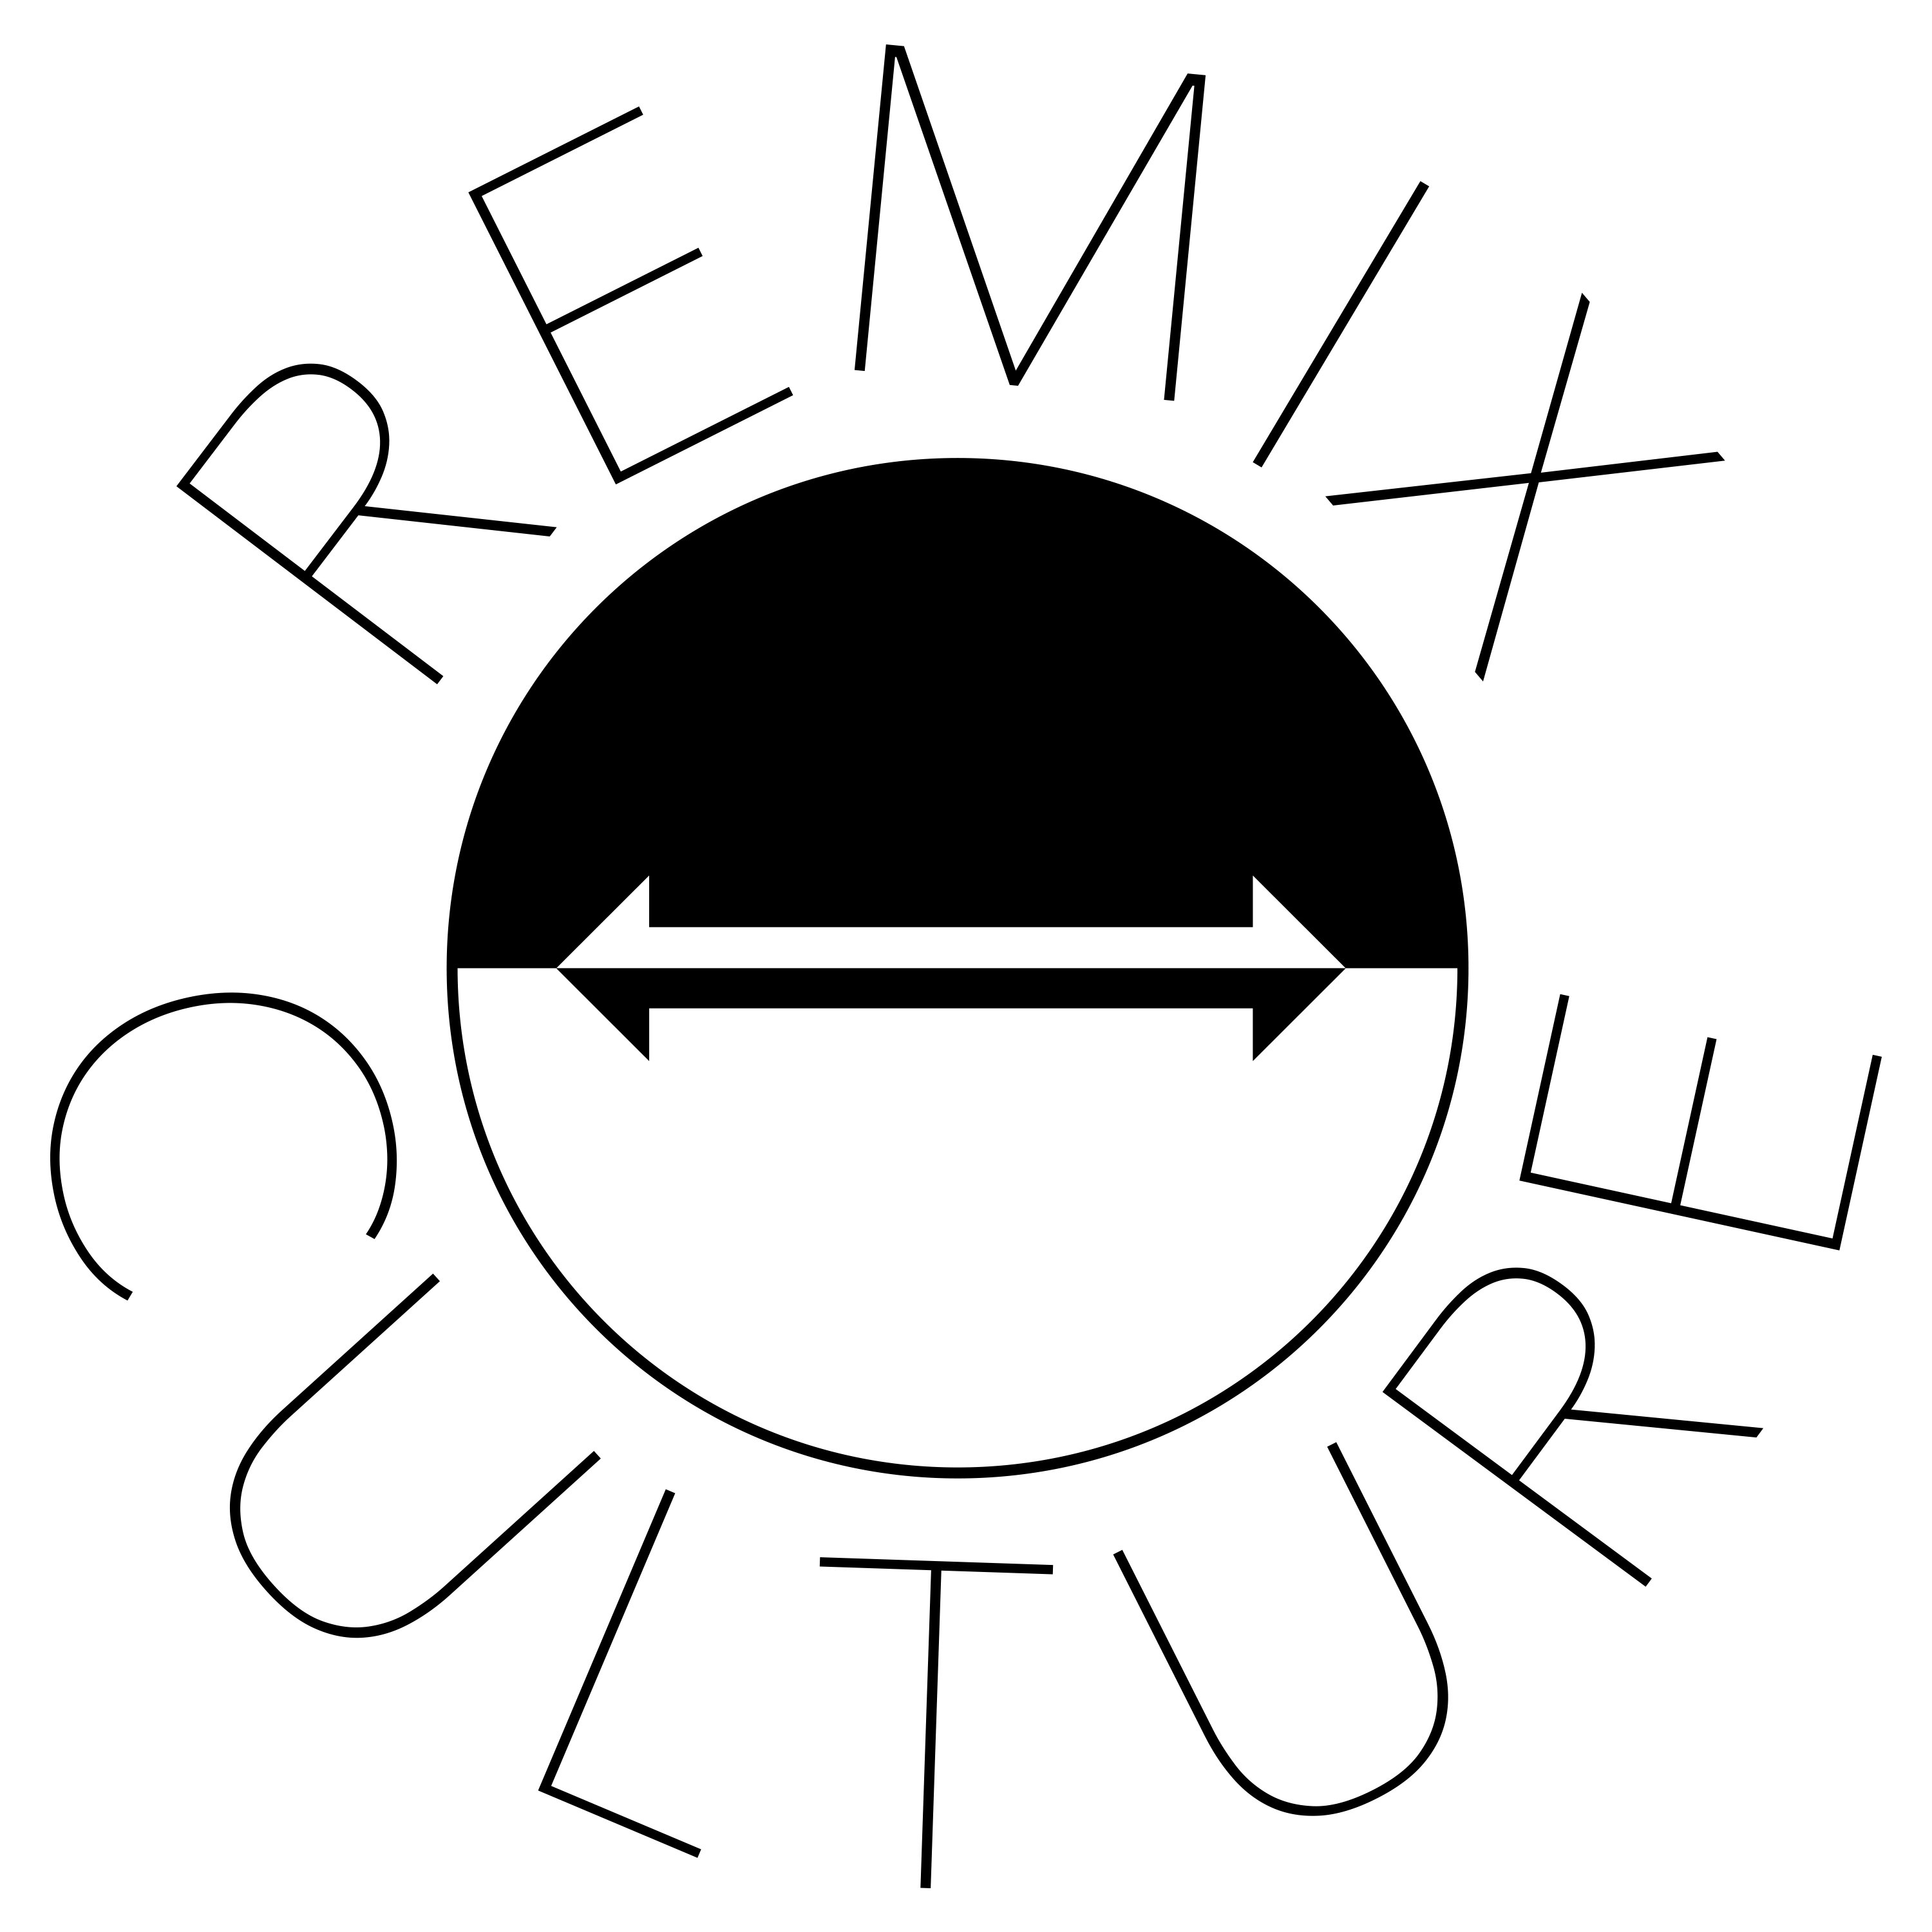 Remix ⟷ Culture logo